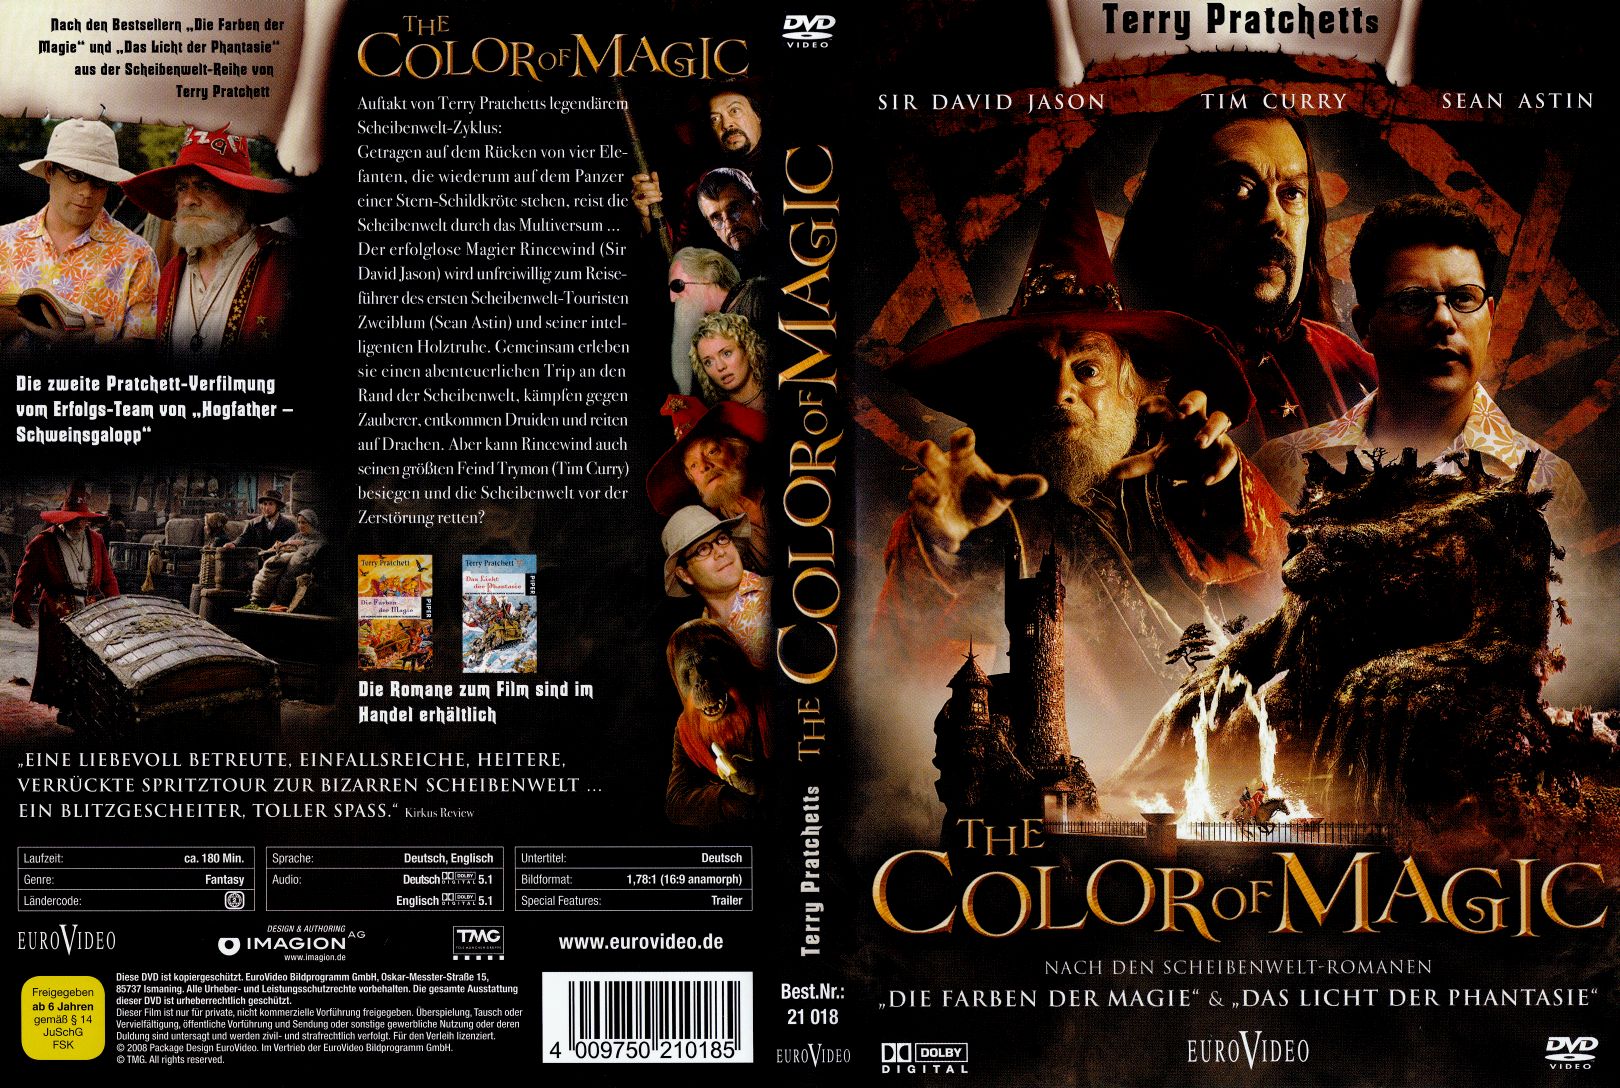 The Colour of Magic (2008) Part 1